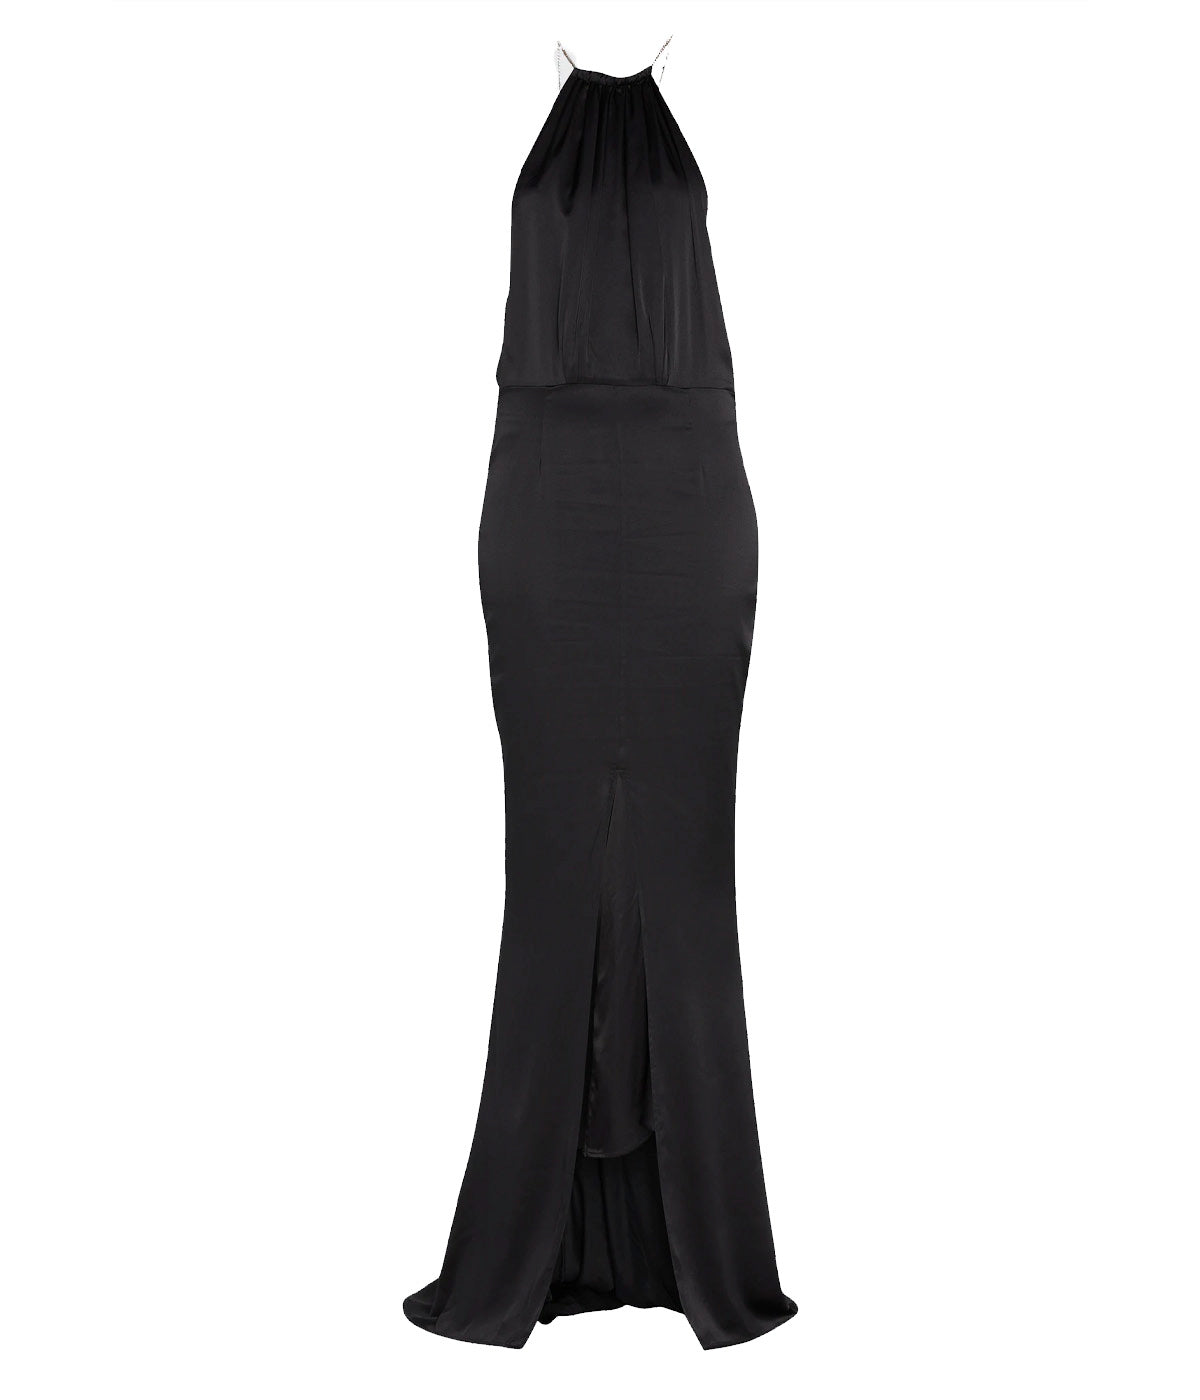 Margot Dress in Black